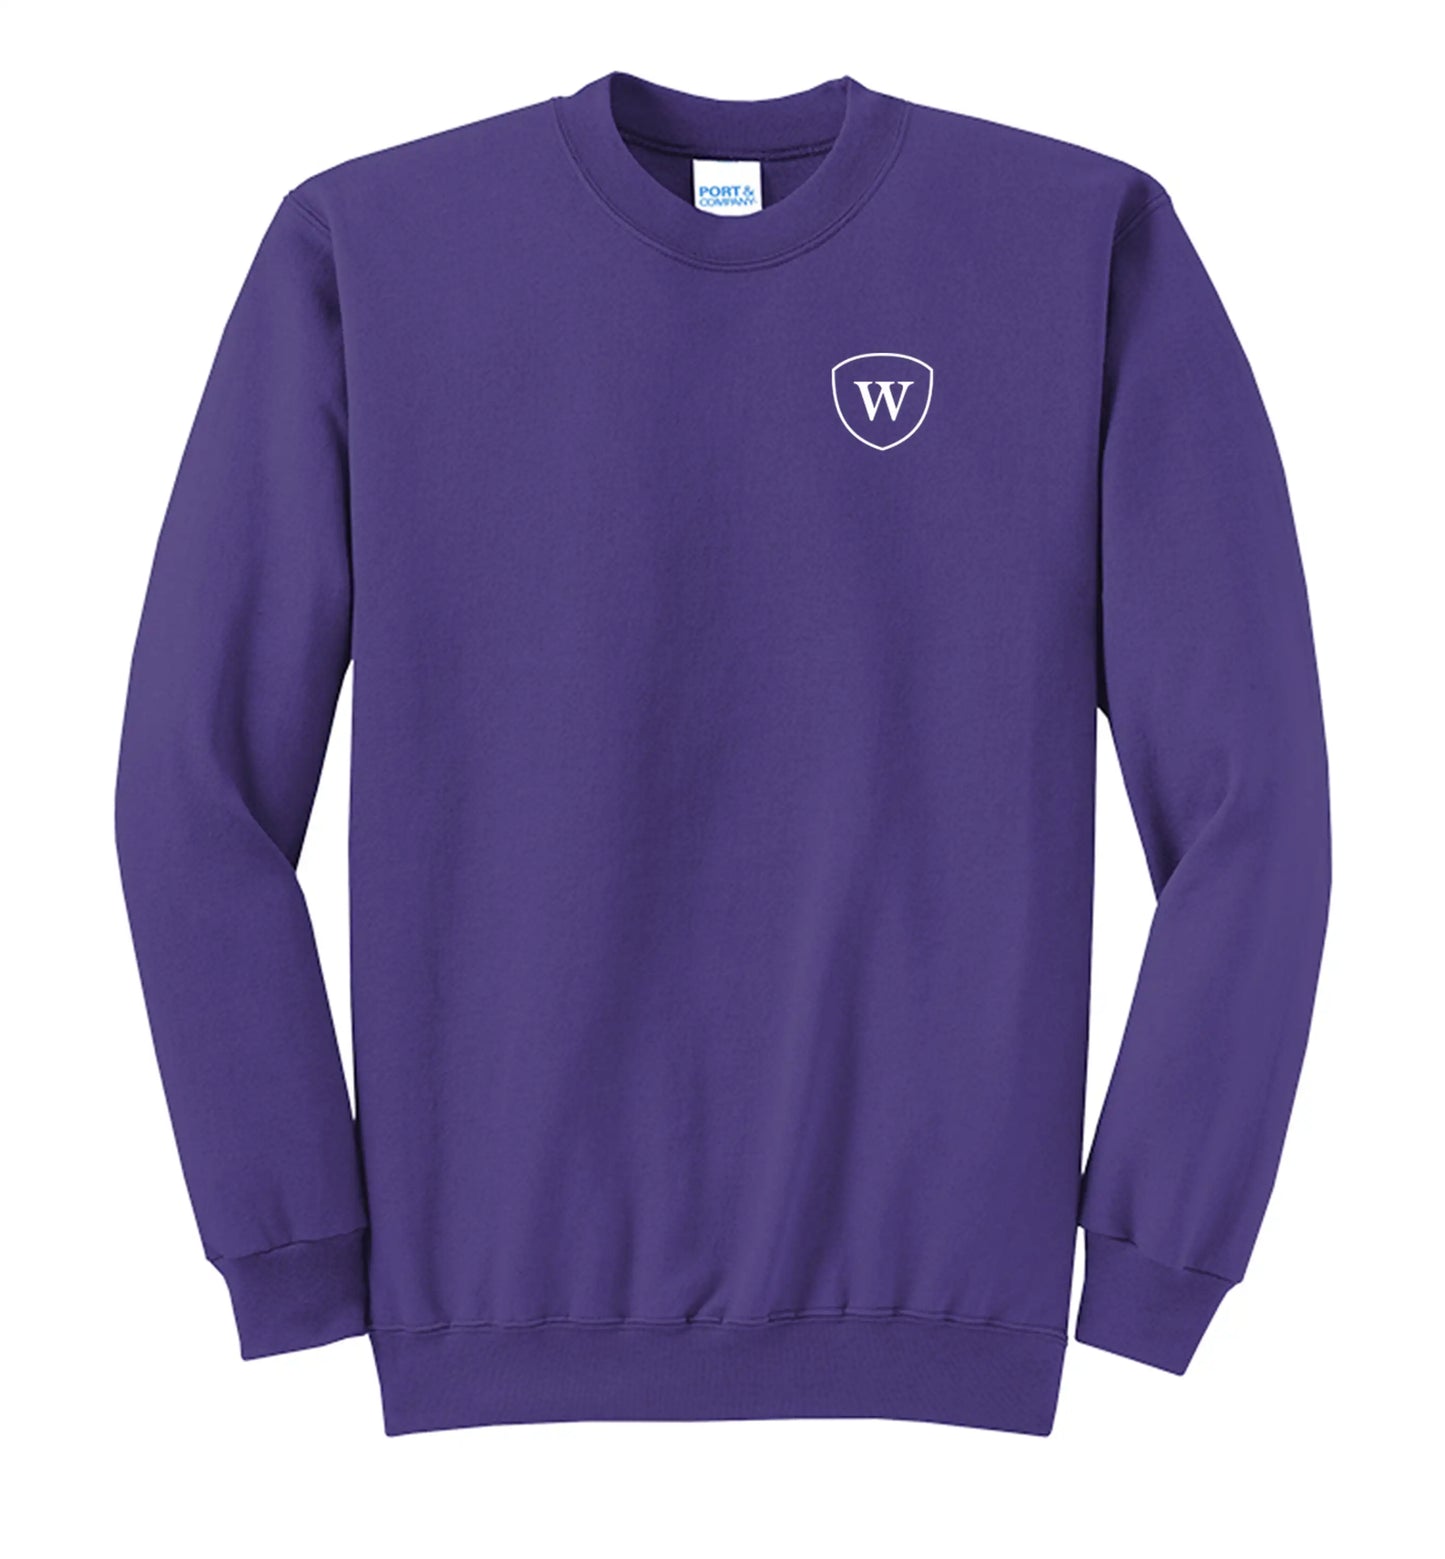 Port & Co Uniform-Approved Sweatshirt